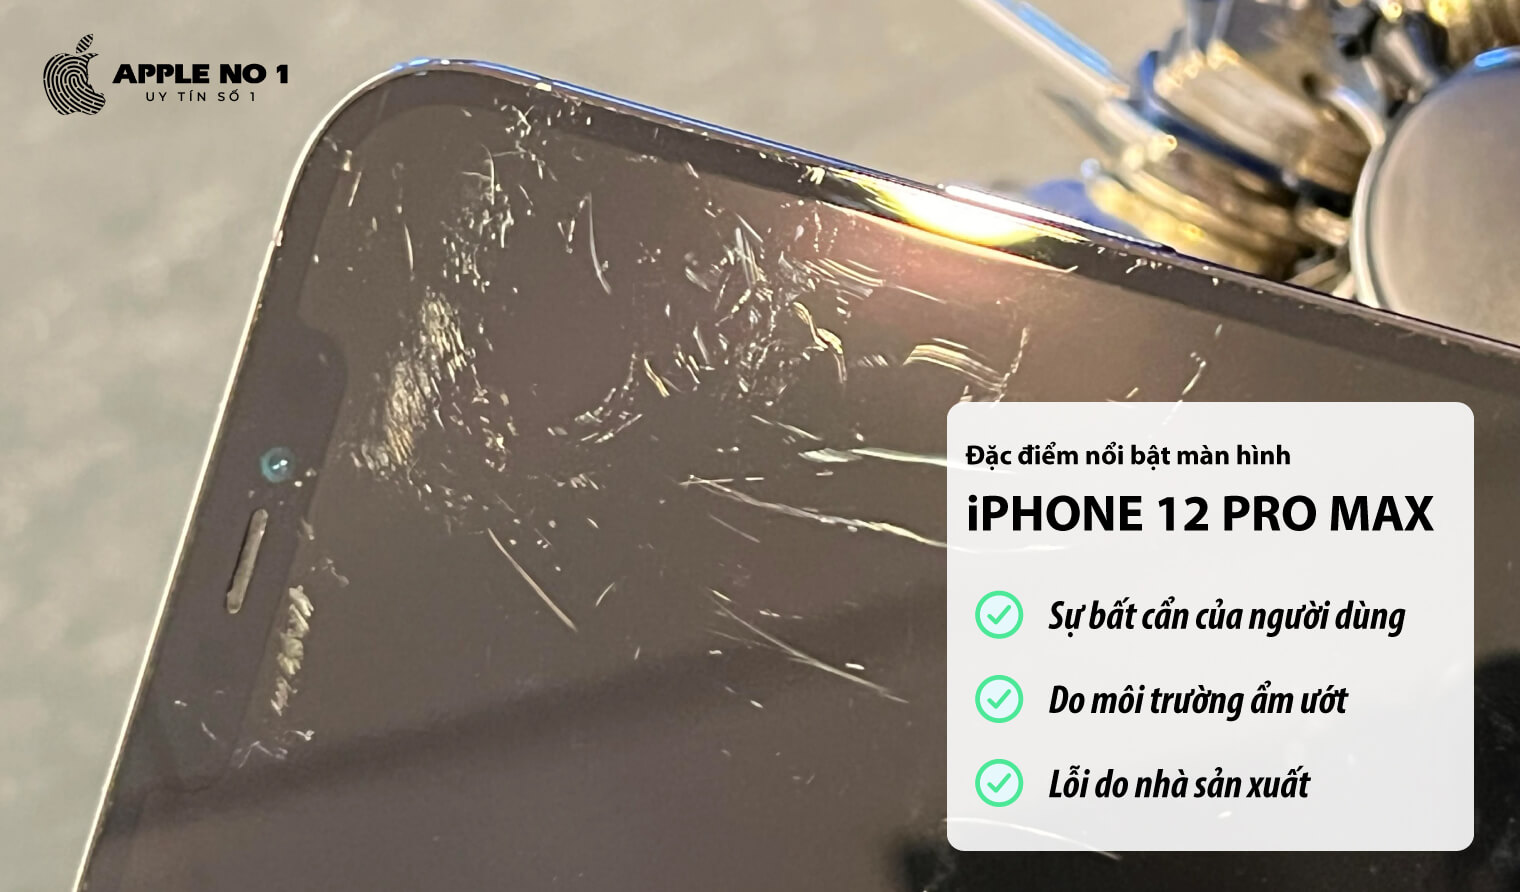 Nguyen nhan hong man hinh iPhone 12 pro max